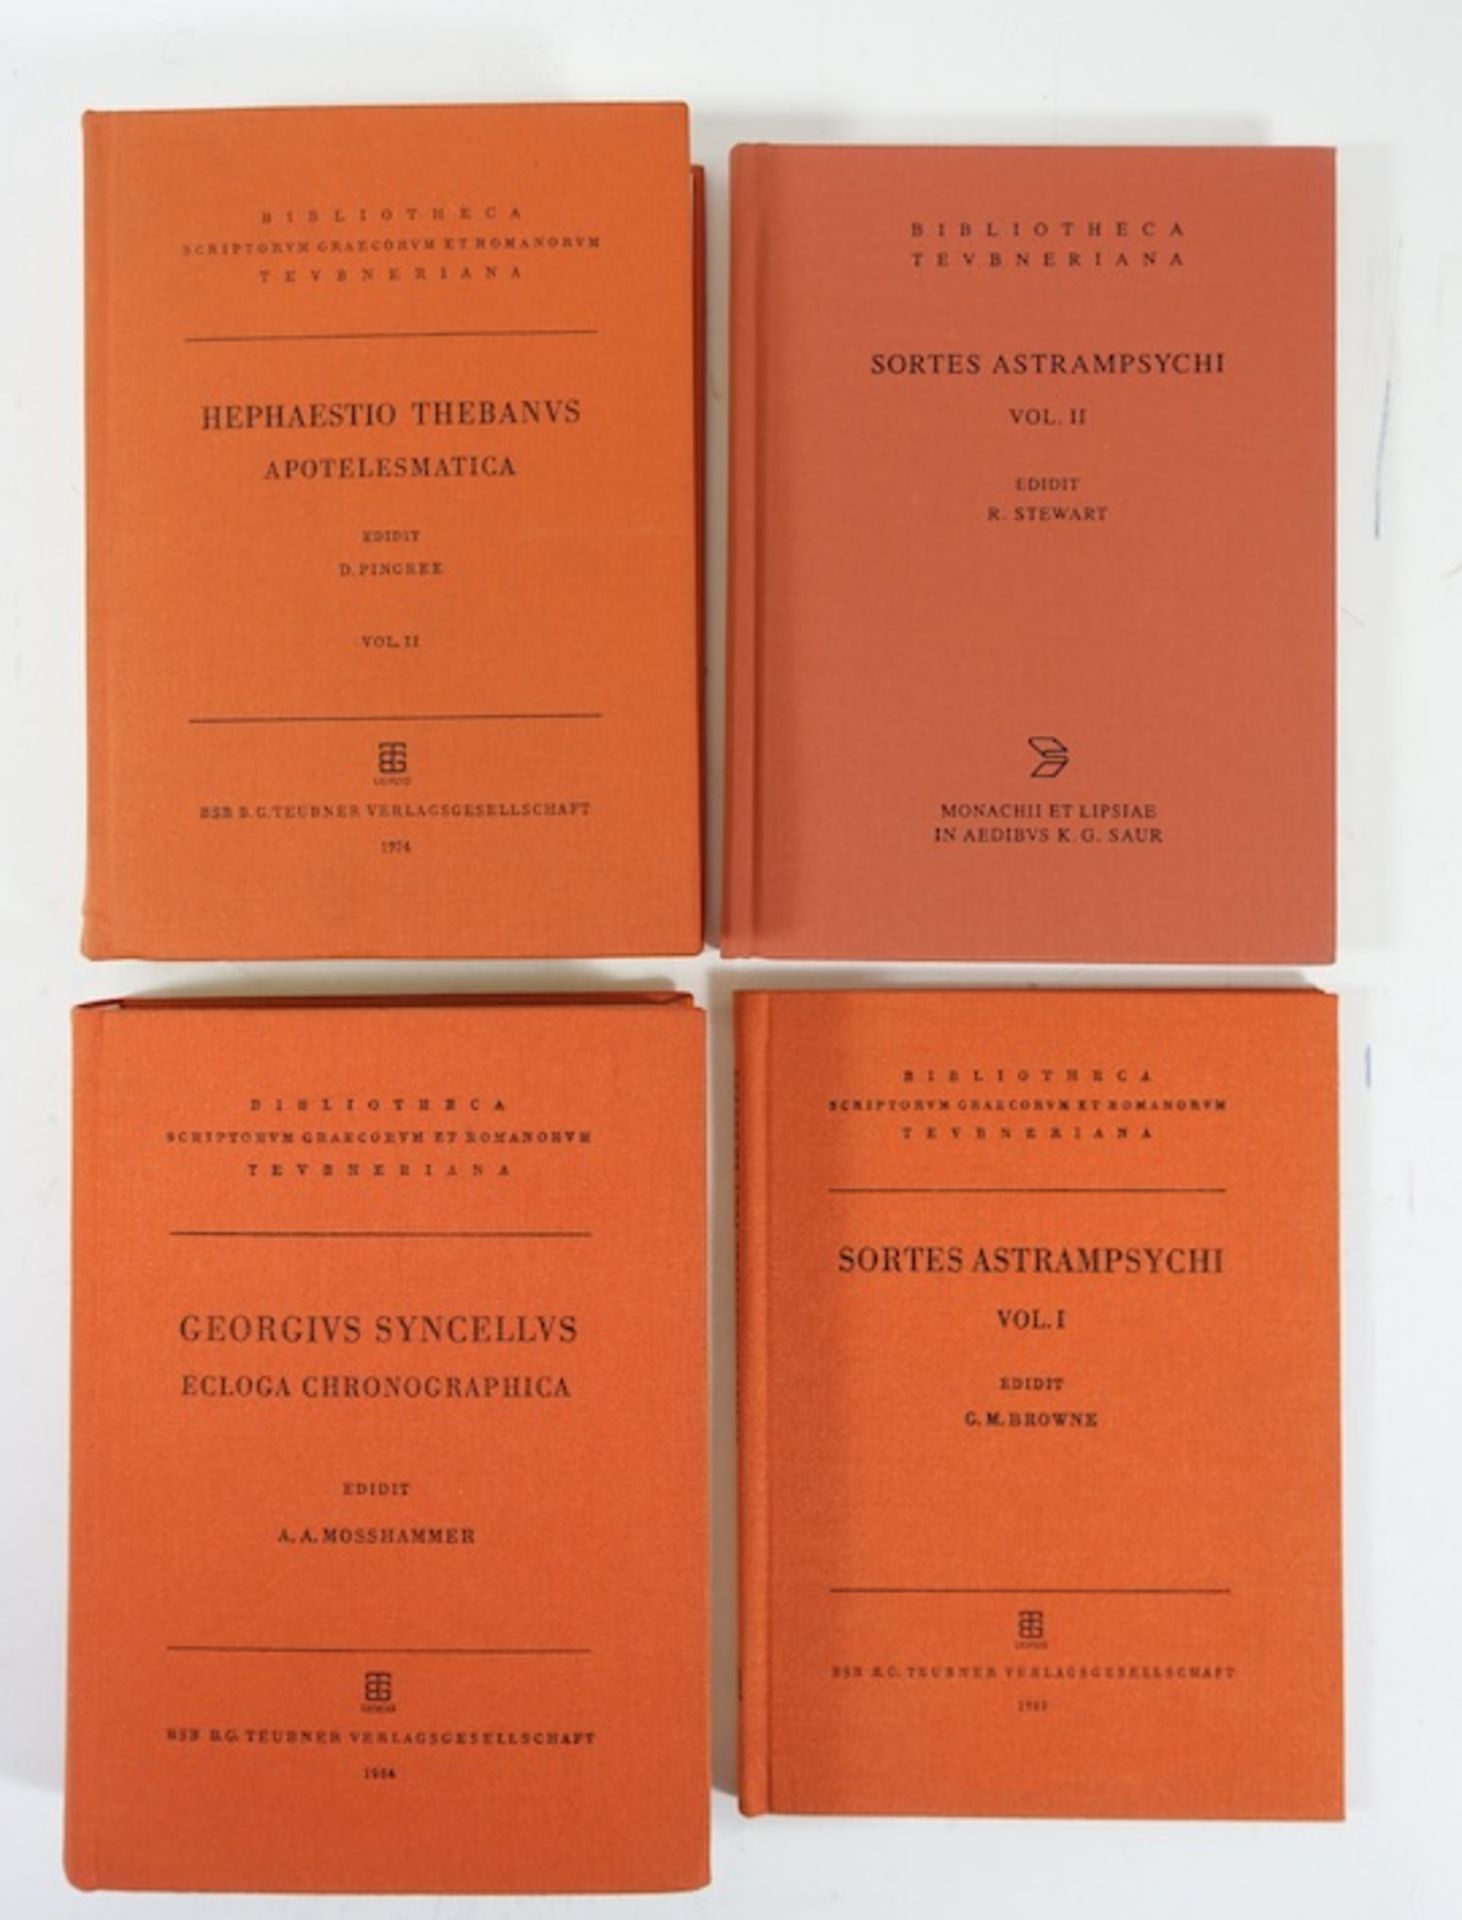 GEORGIUS SYNCELLUS. Ecloga chronographica. Ed. A.A. Mosshammer. 1984. -- SORTES ASTRAMPSYCHI.